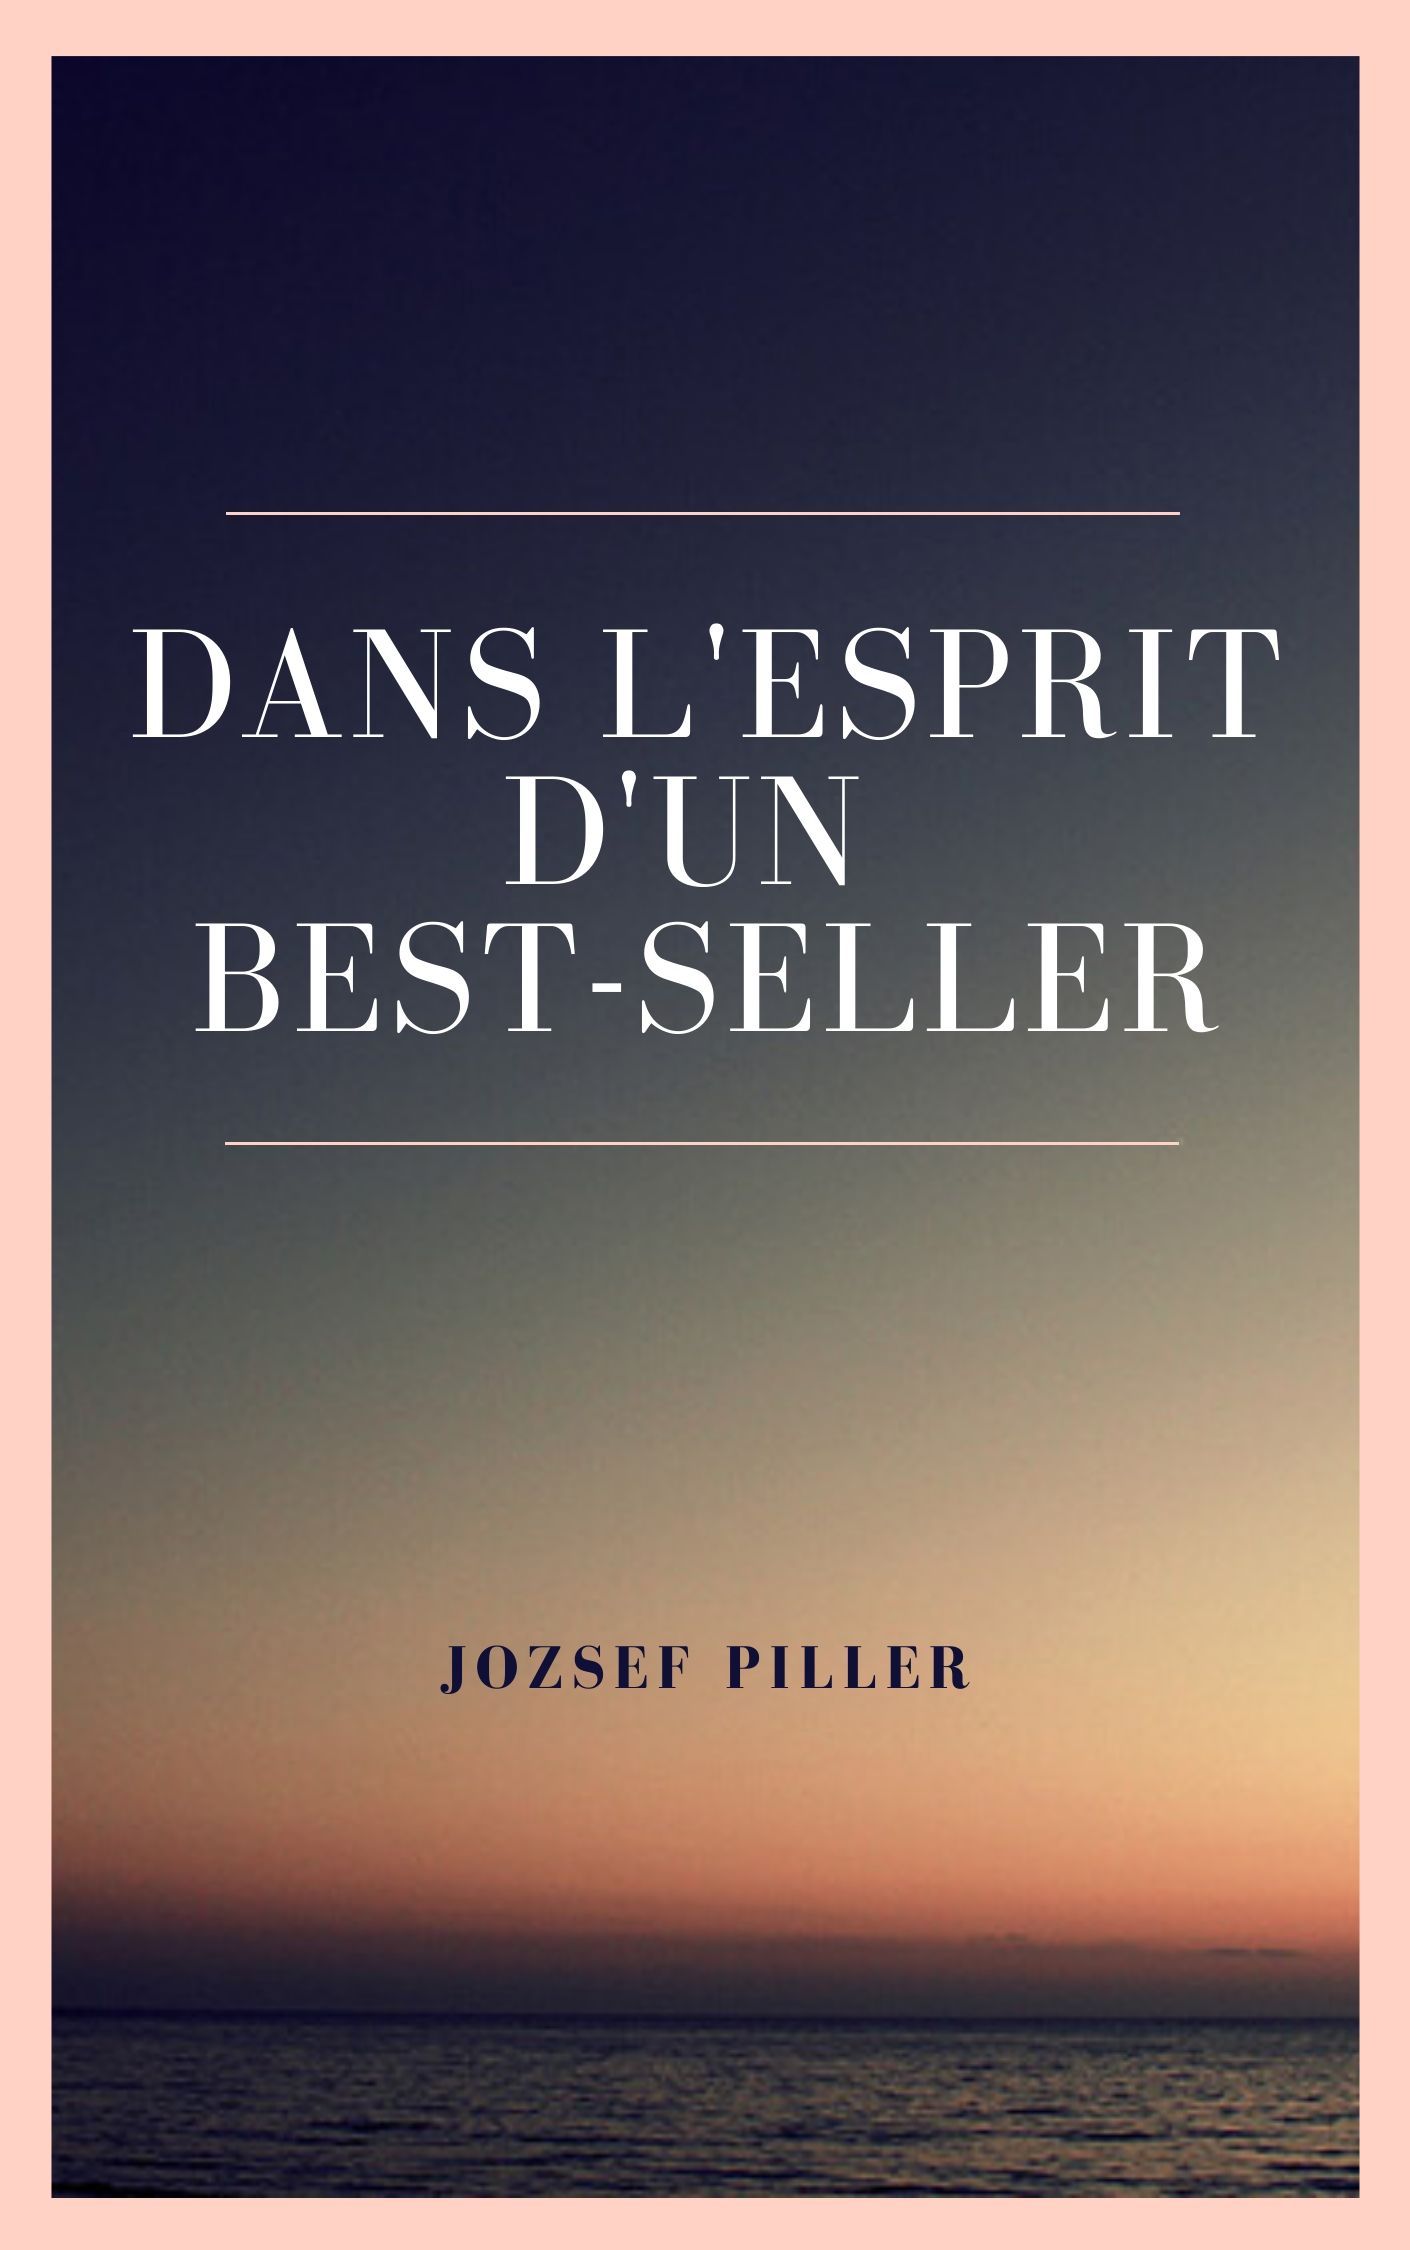 Dans l'esprit d'un best-seller, eBook by Jozsef Piller